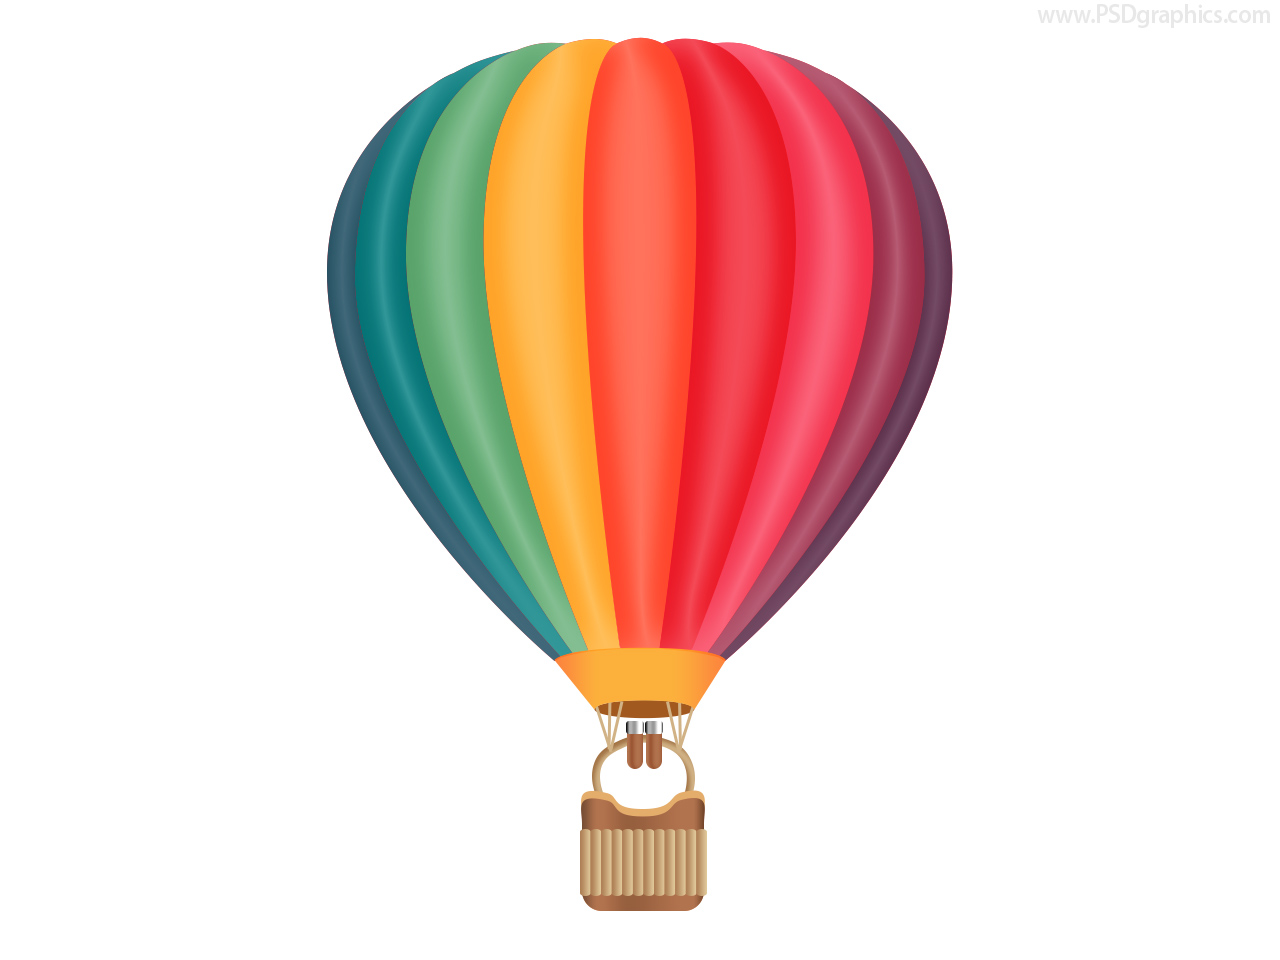 Коротышки воздушный шар. Воздушный шар для детей. Воздушный шар на белом фоне. Vozdushnyye shar. Большой воздушный шар.